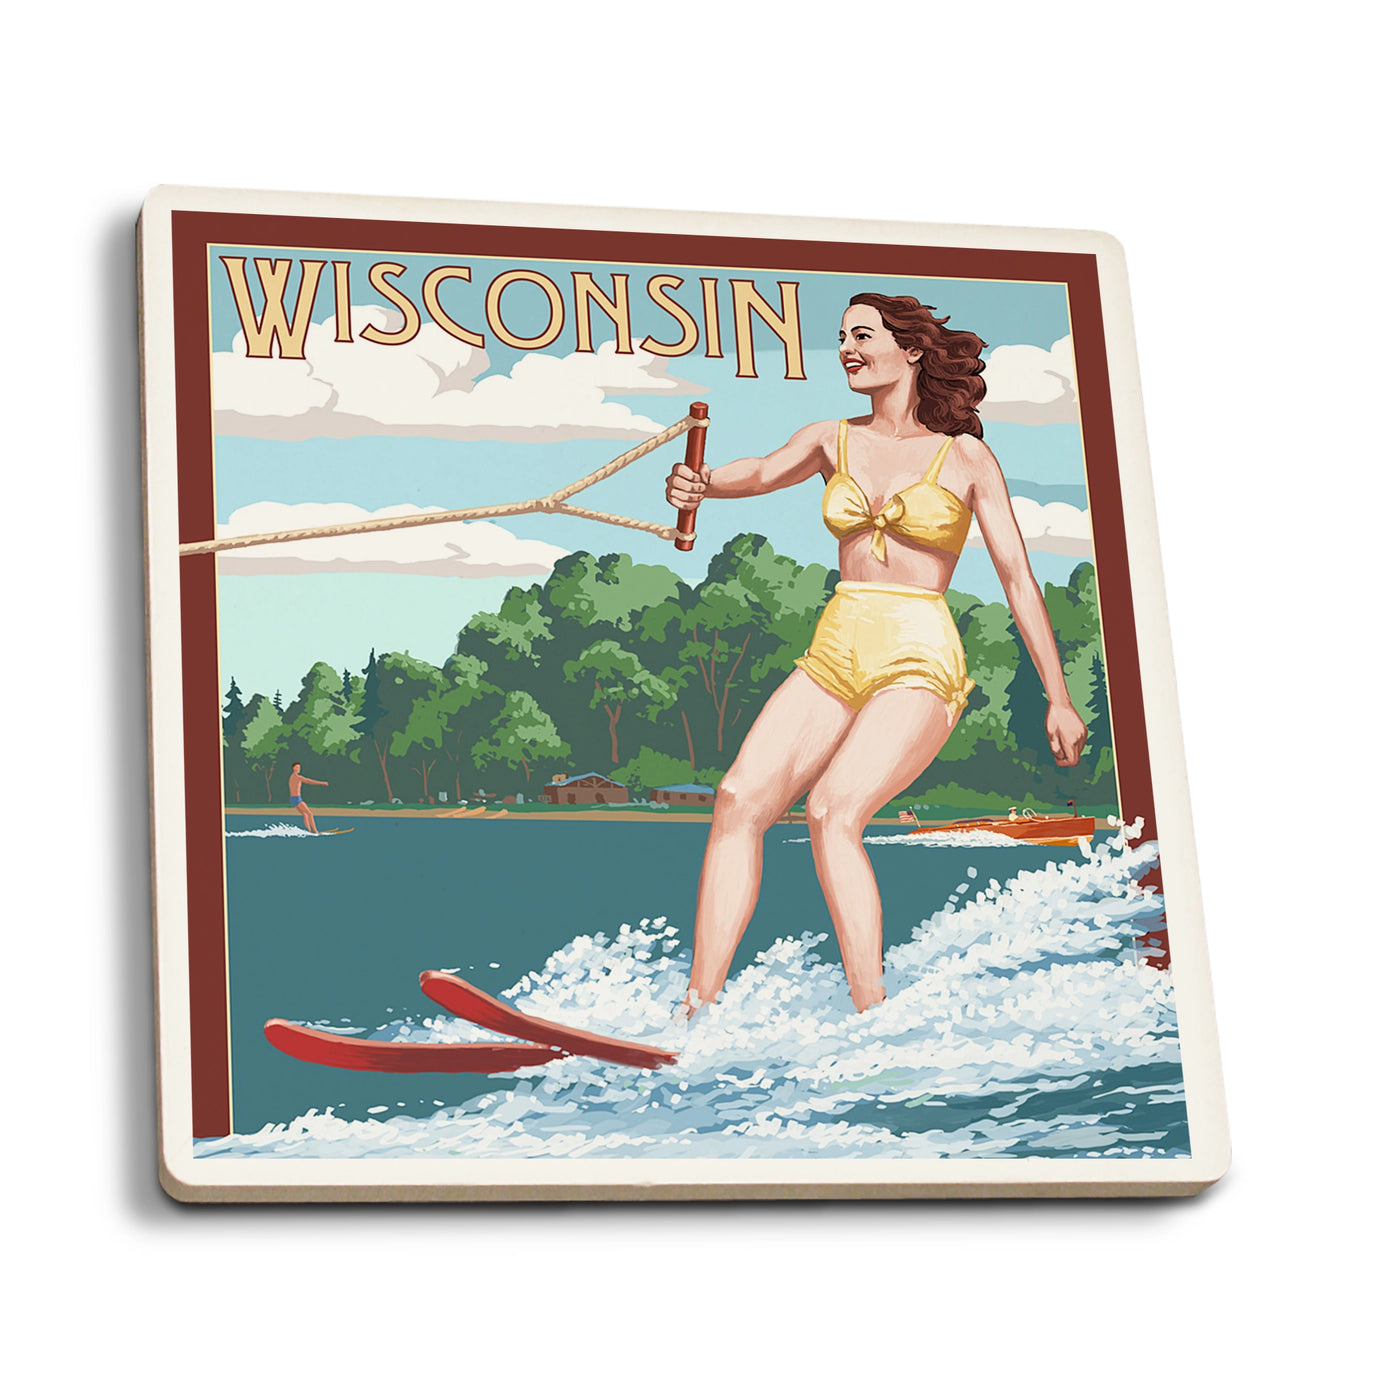 Wisconsin Water Skier Ceramic Coaster